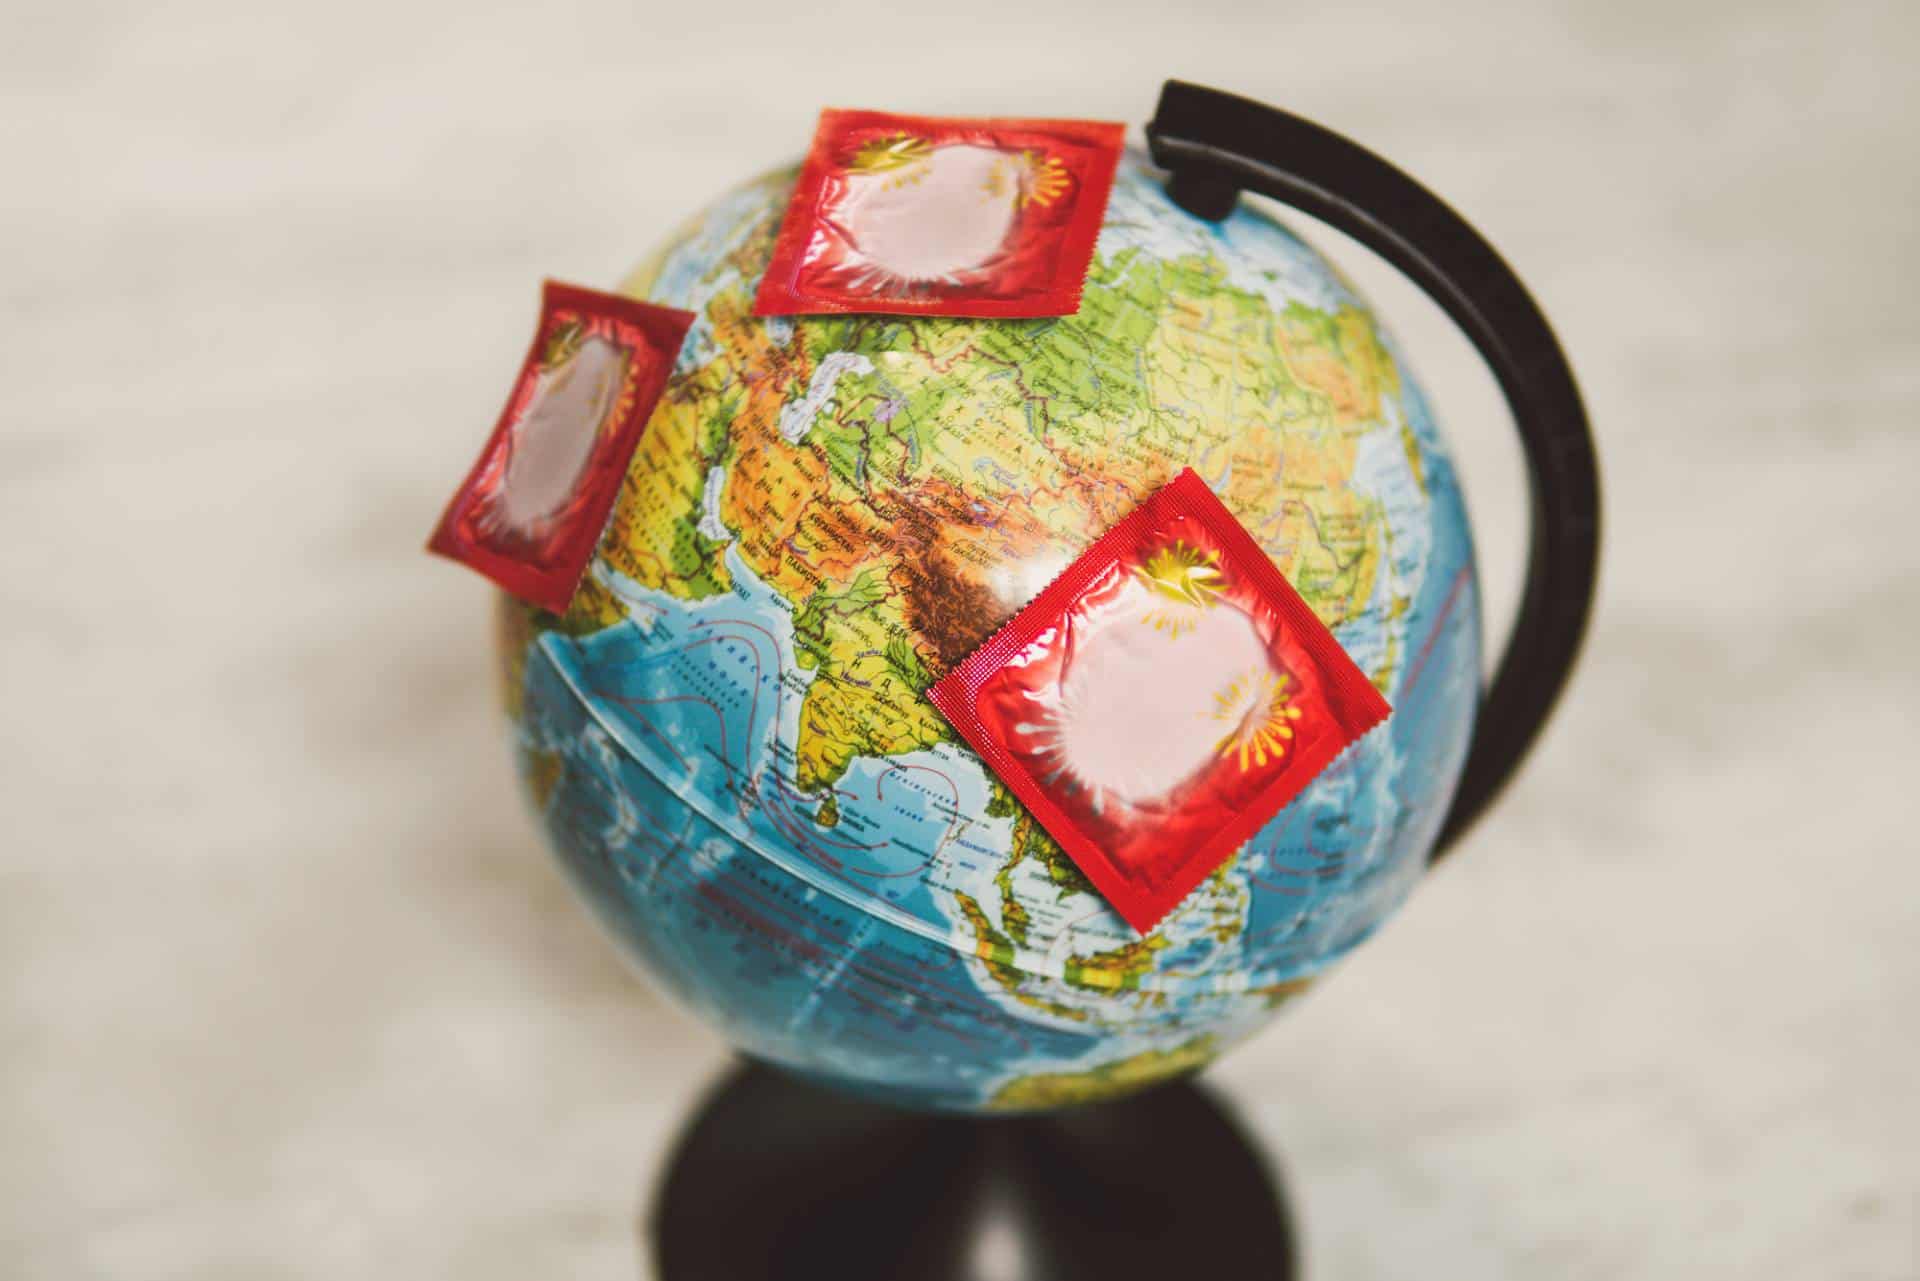 Packs of condoms on globe depicting global sex survey.